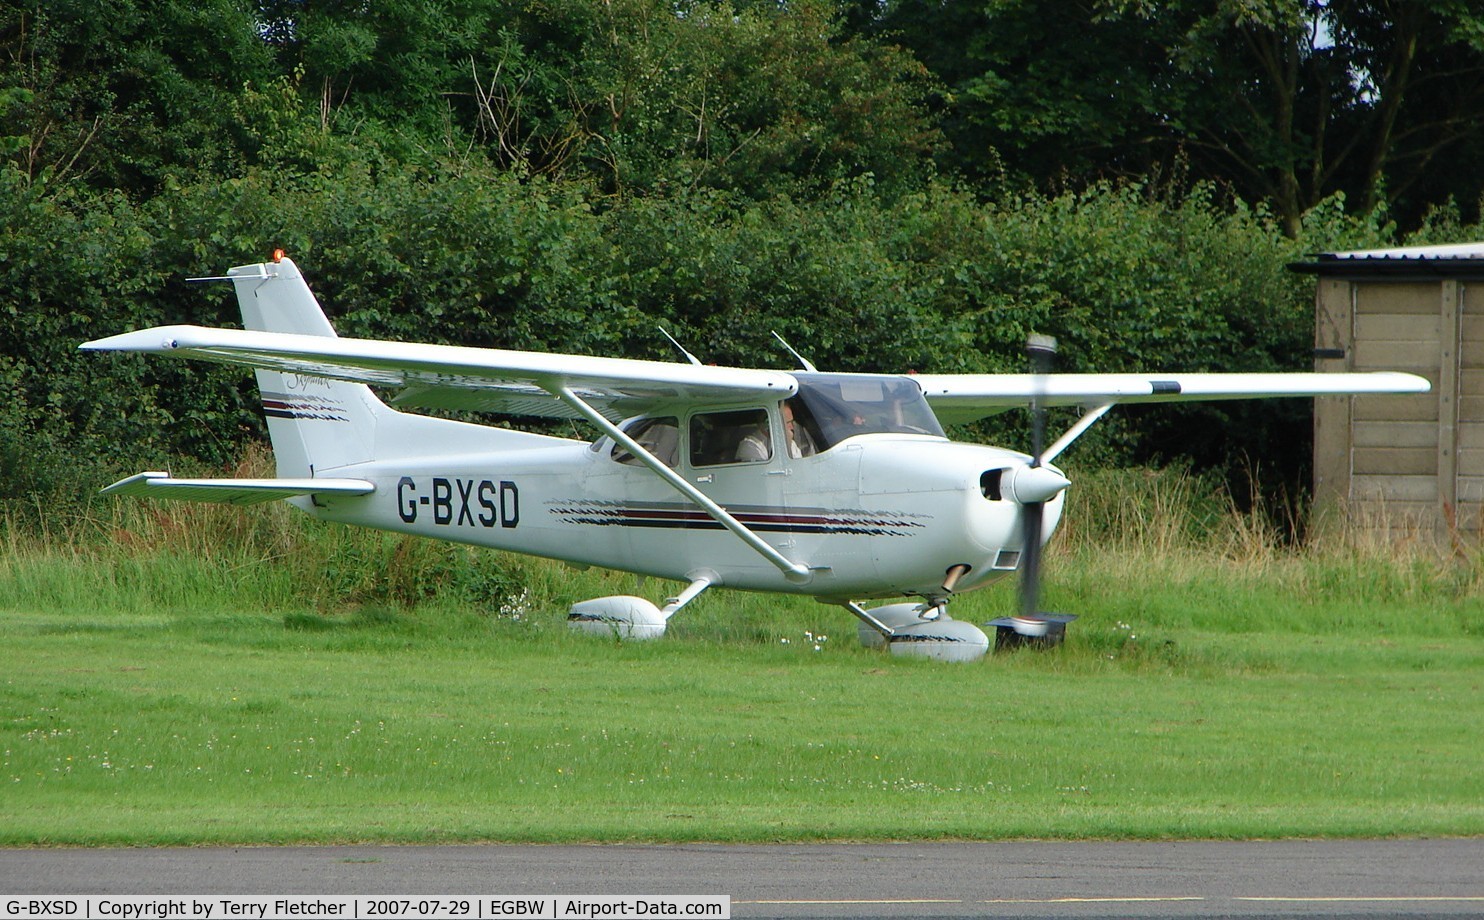 G-BXSD, 1998 Cessna 172R C/N 17280310, early Sunday morning at Wellesborne Mountford